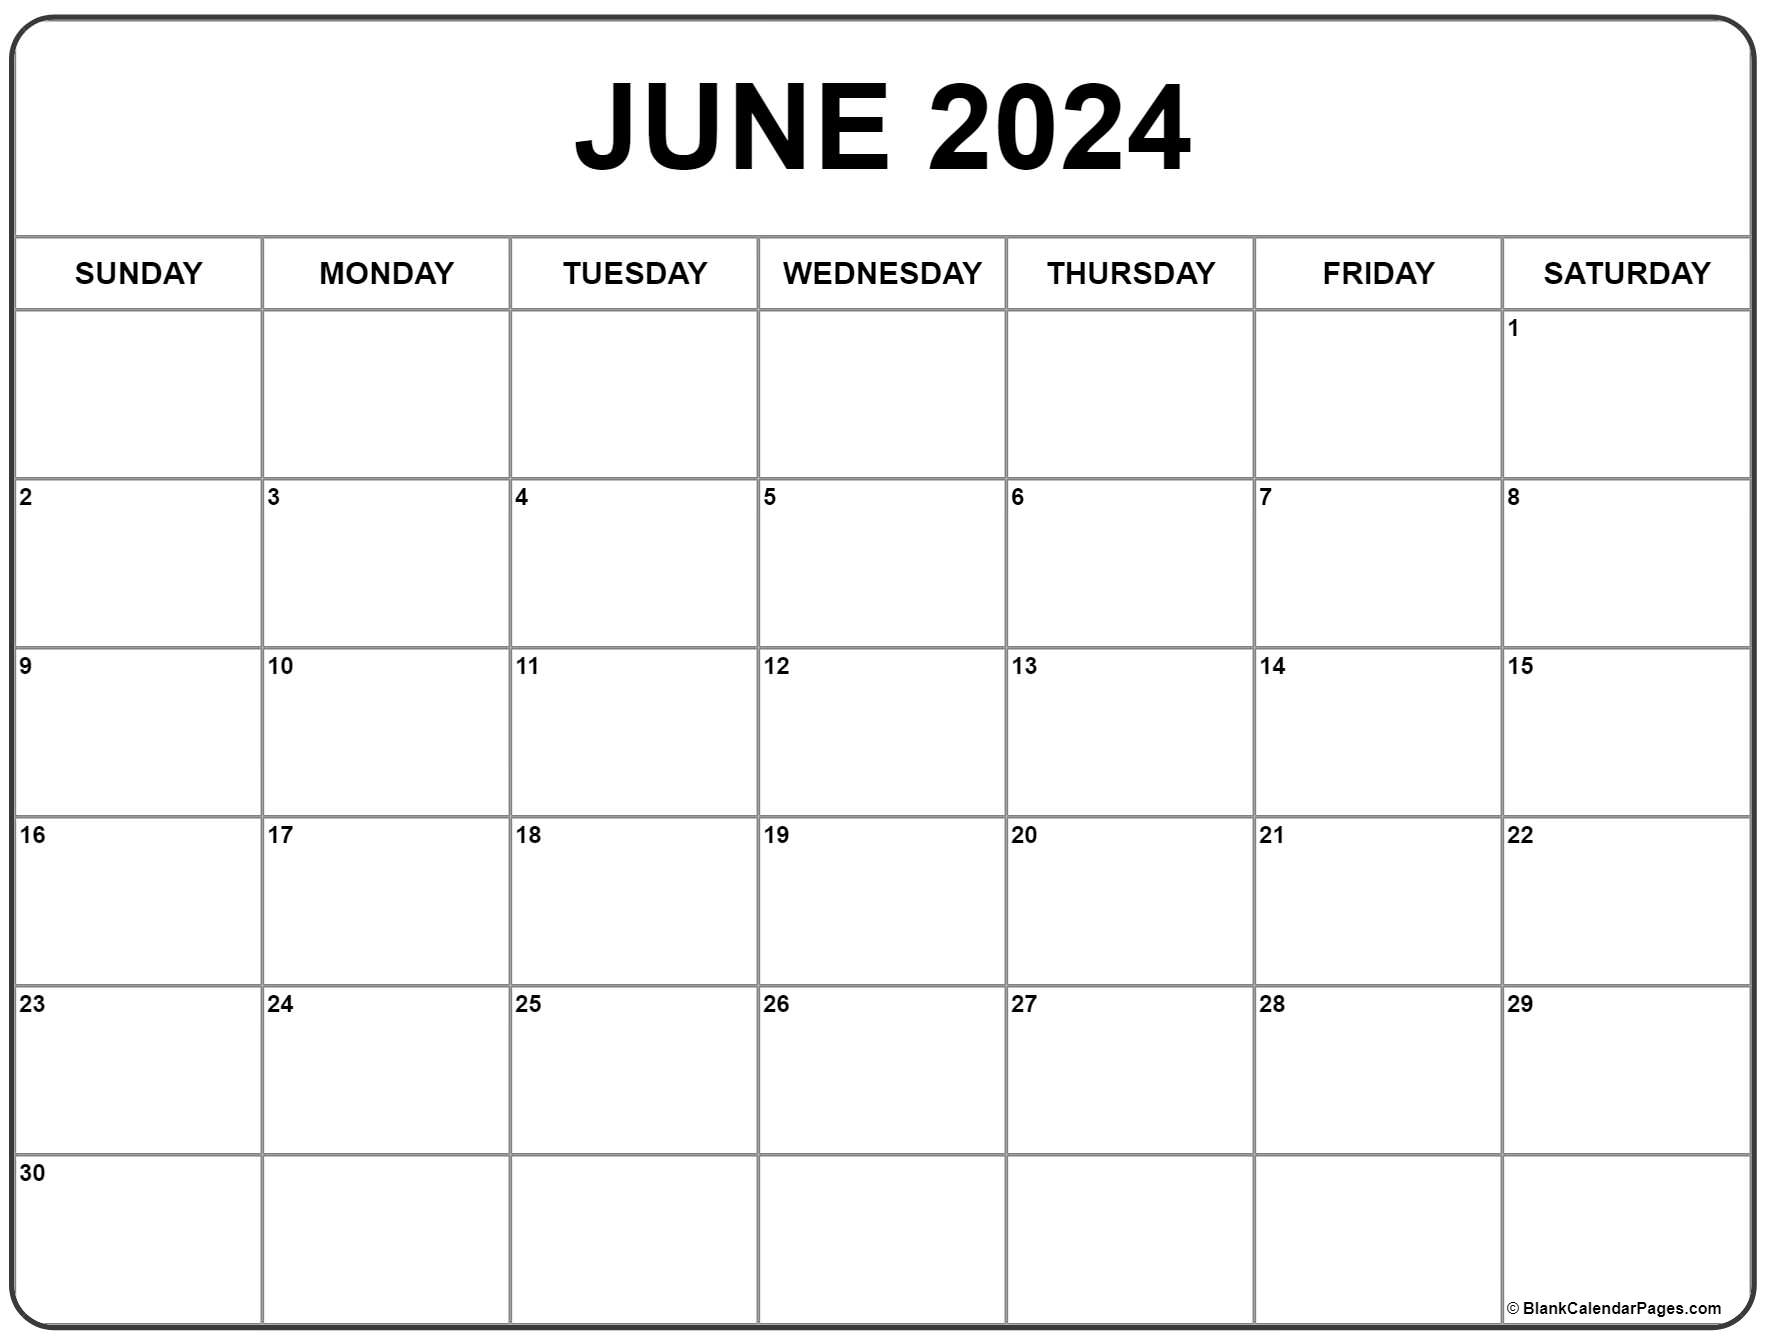 June 2024 Calendar | Free Printable Calendar | Printable Calendar June 2024 Free